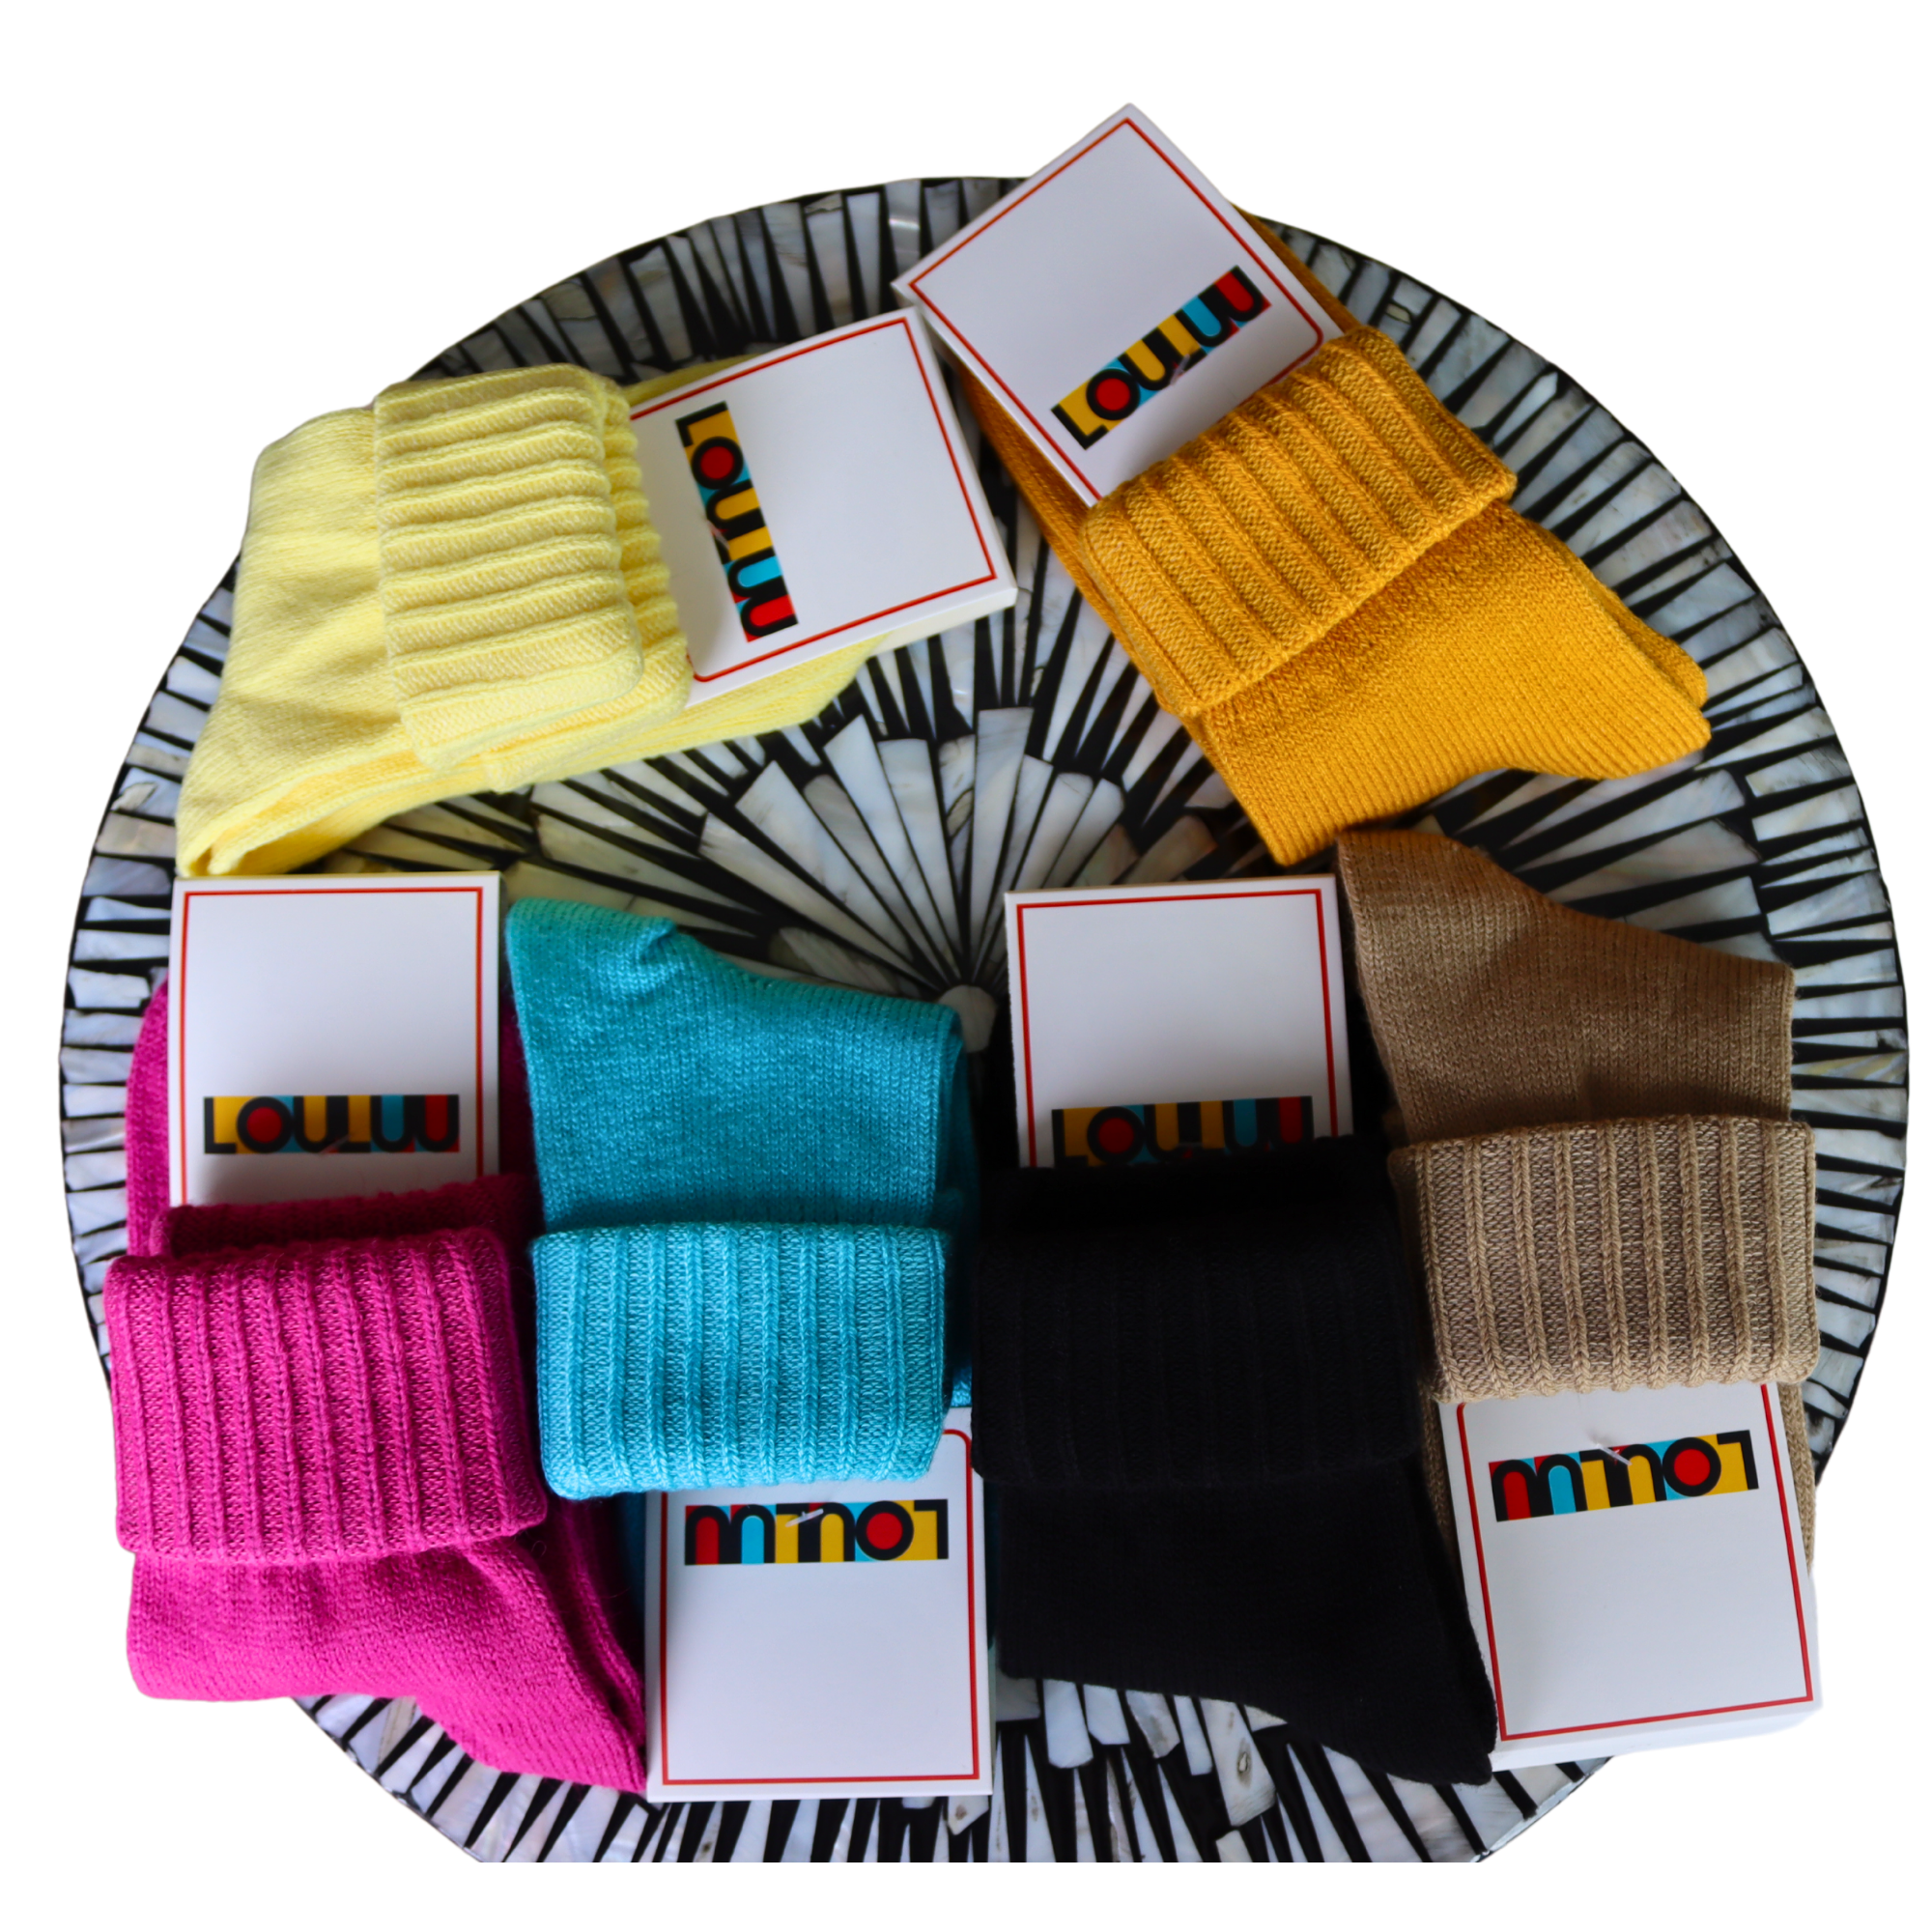 Louluu Wool Fuchsia Colour Turn Cuff Soft Ankle Socks